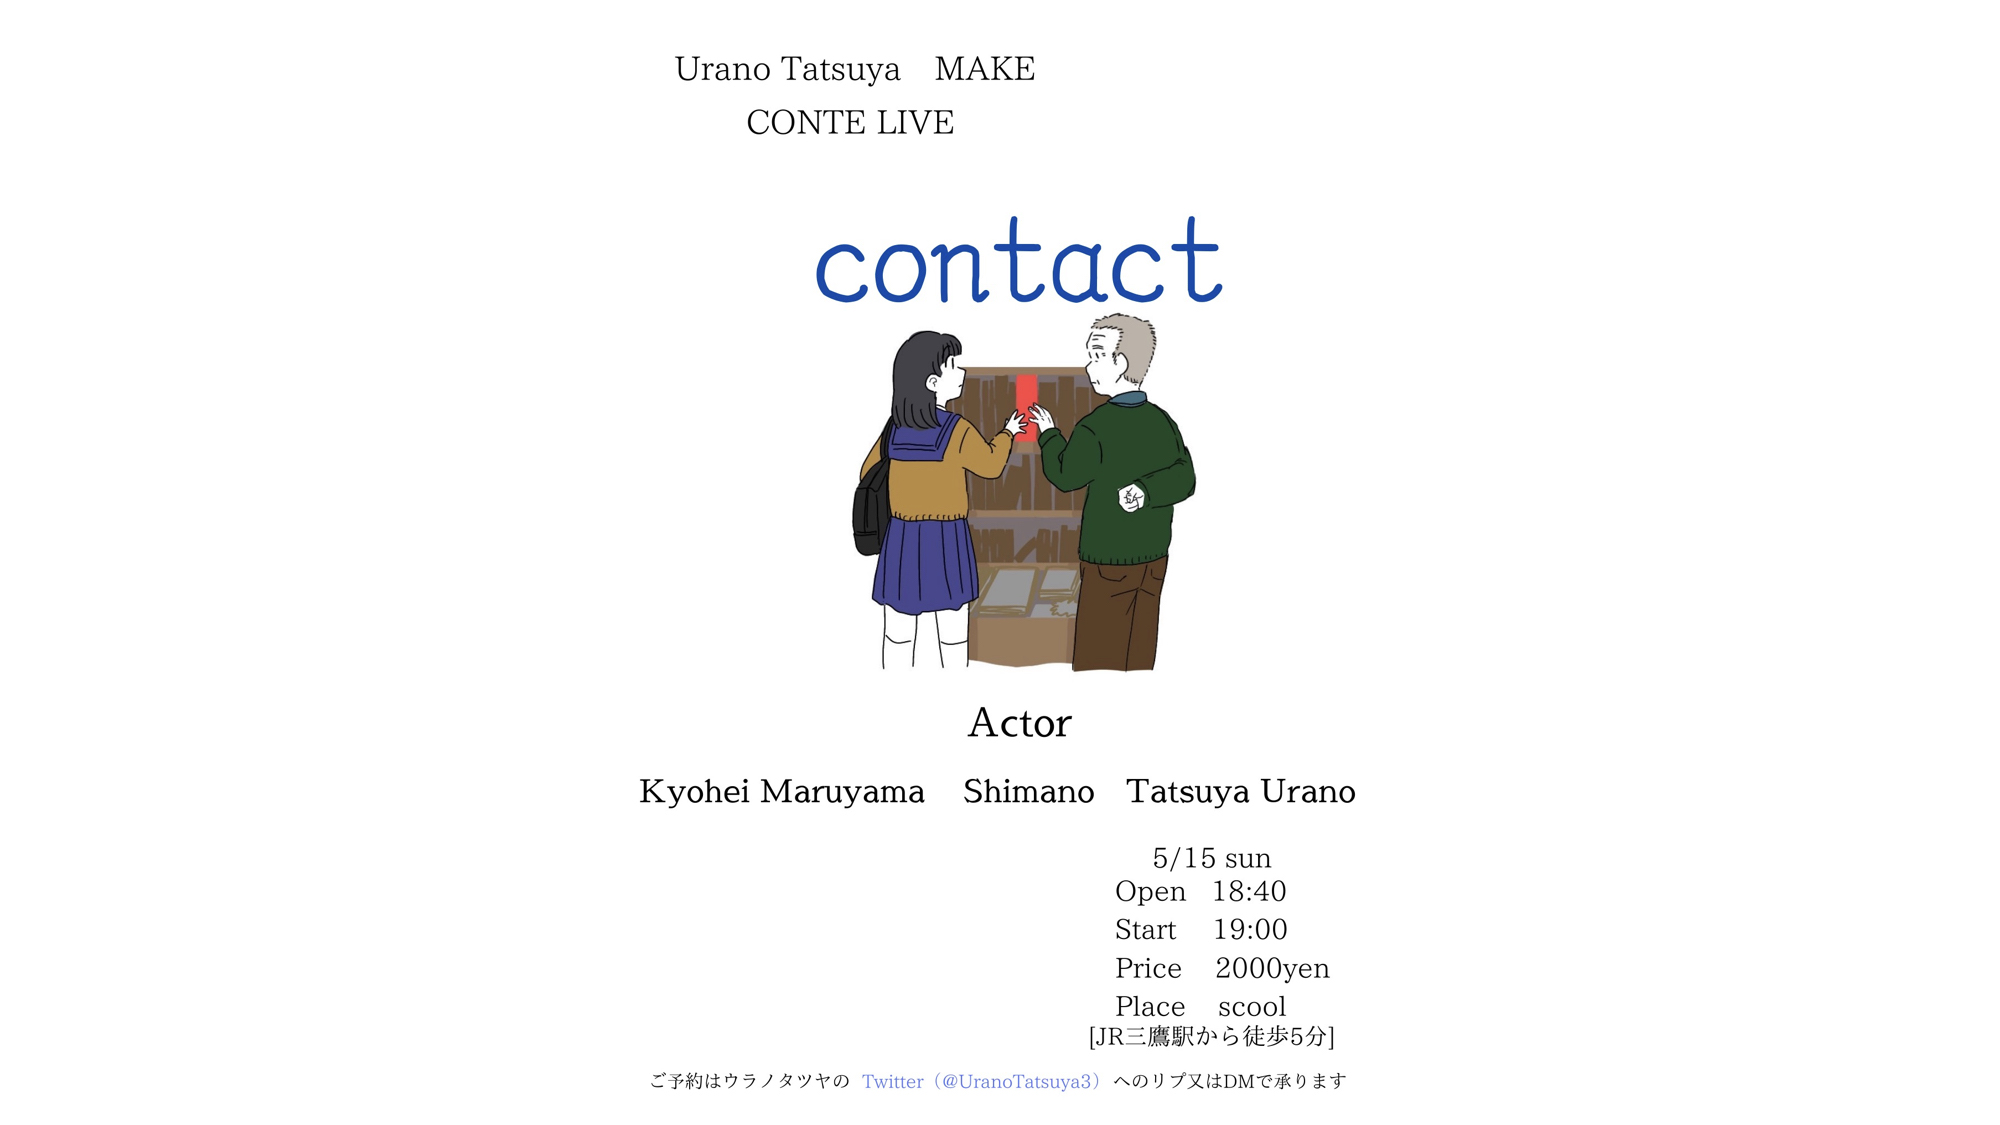 CONTE LIVE『contact』